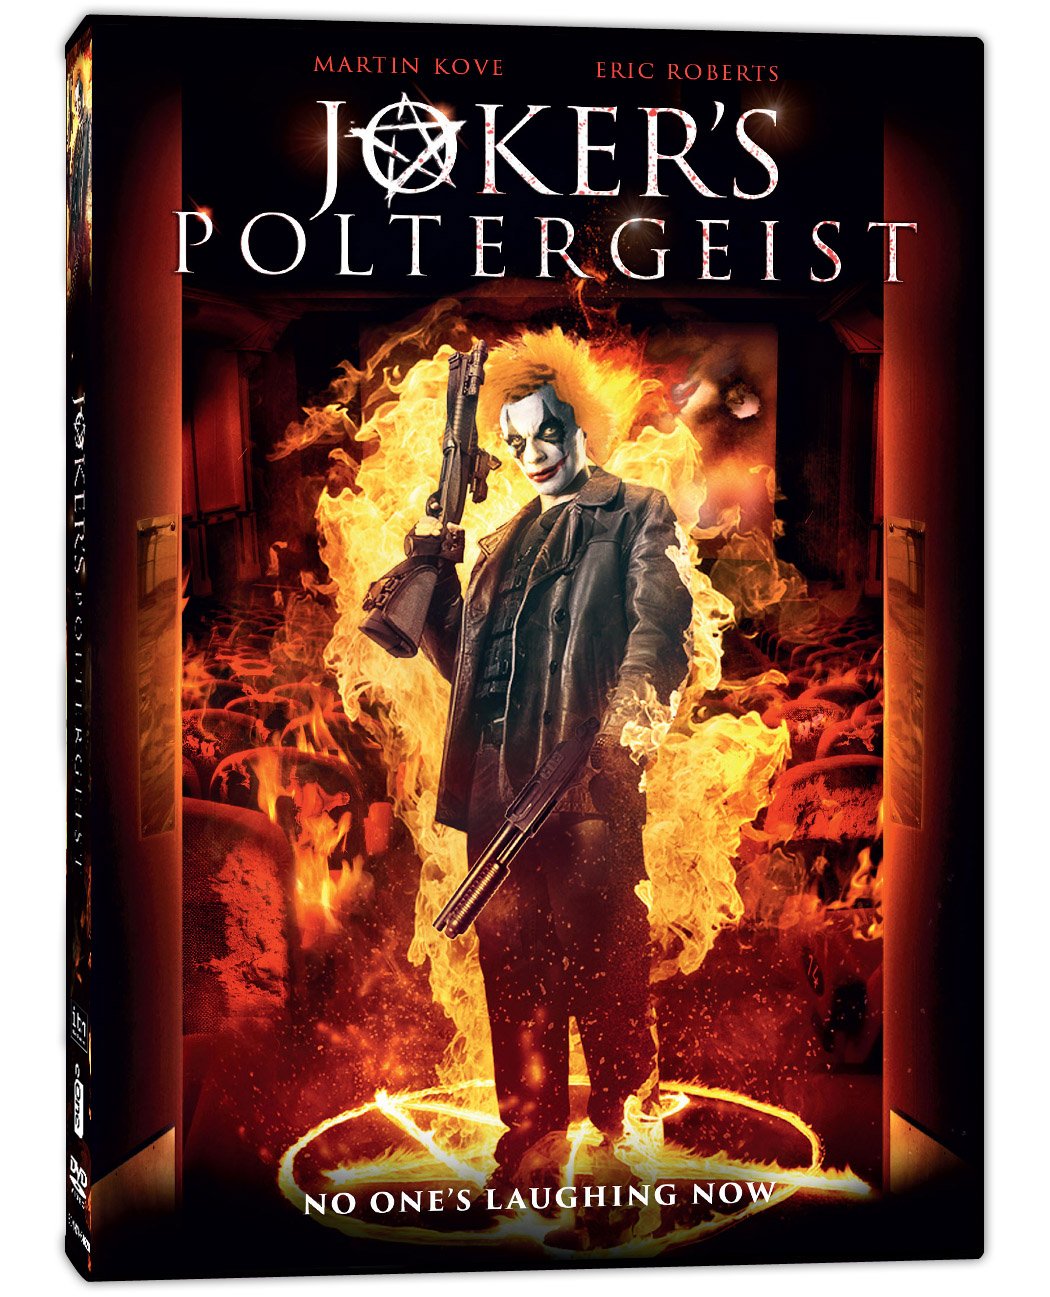 Joker's Poltergeist DVD